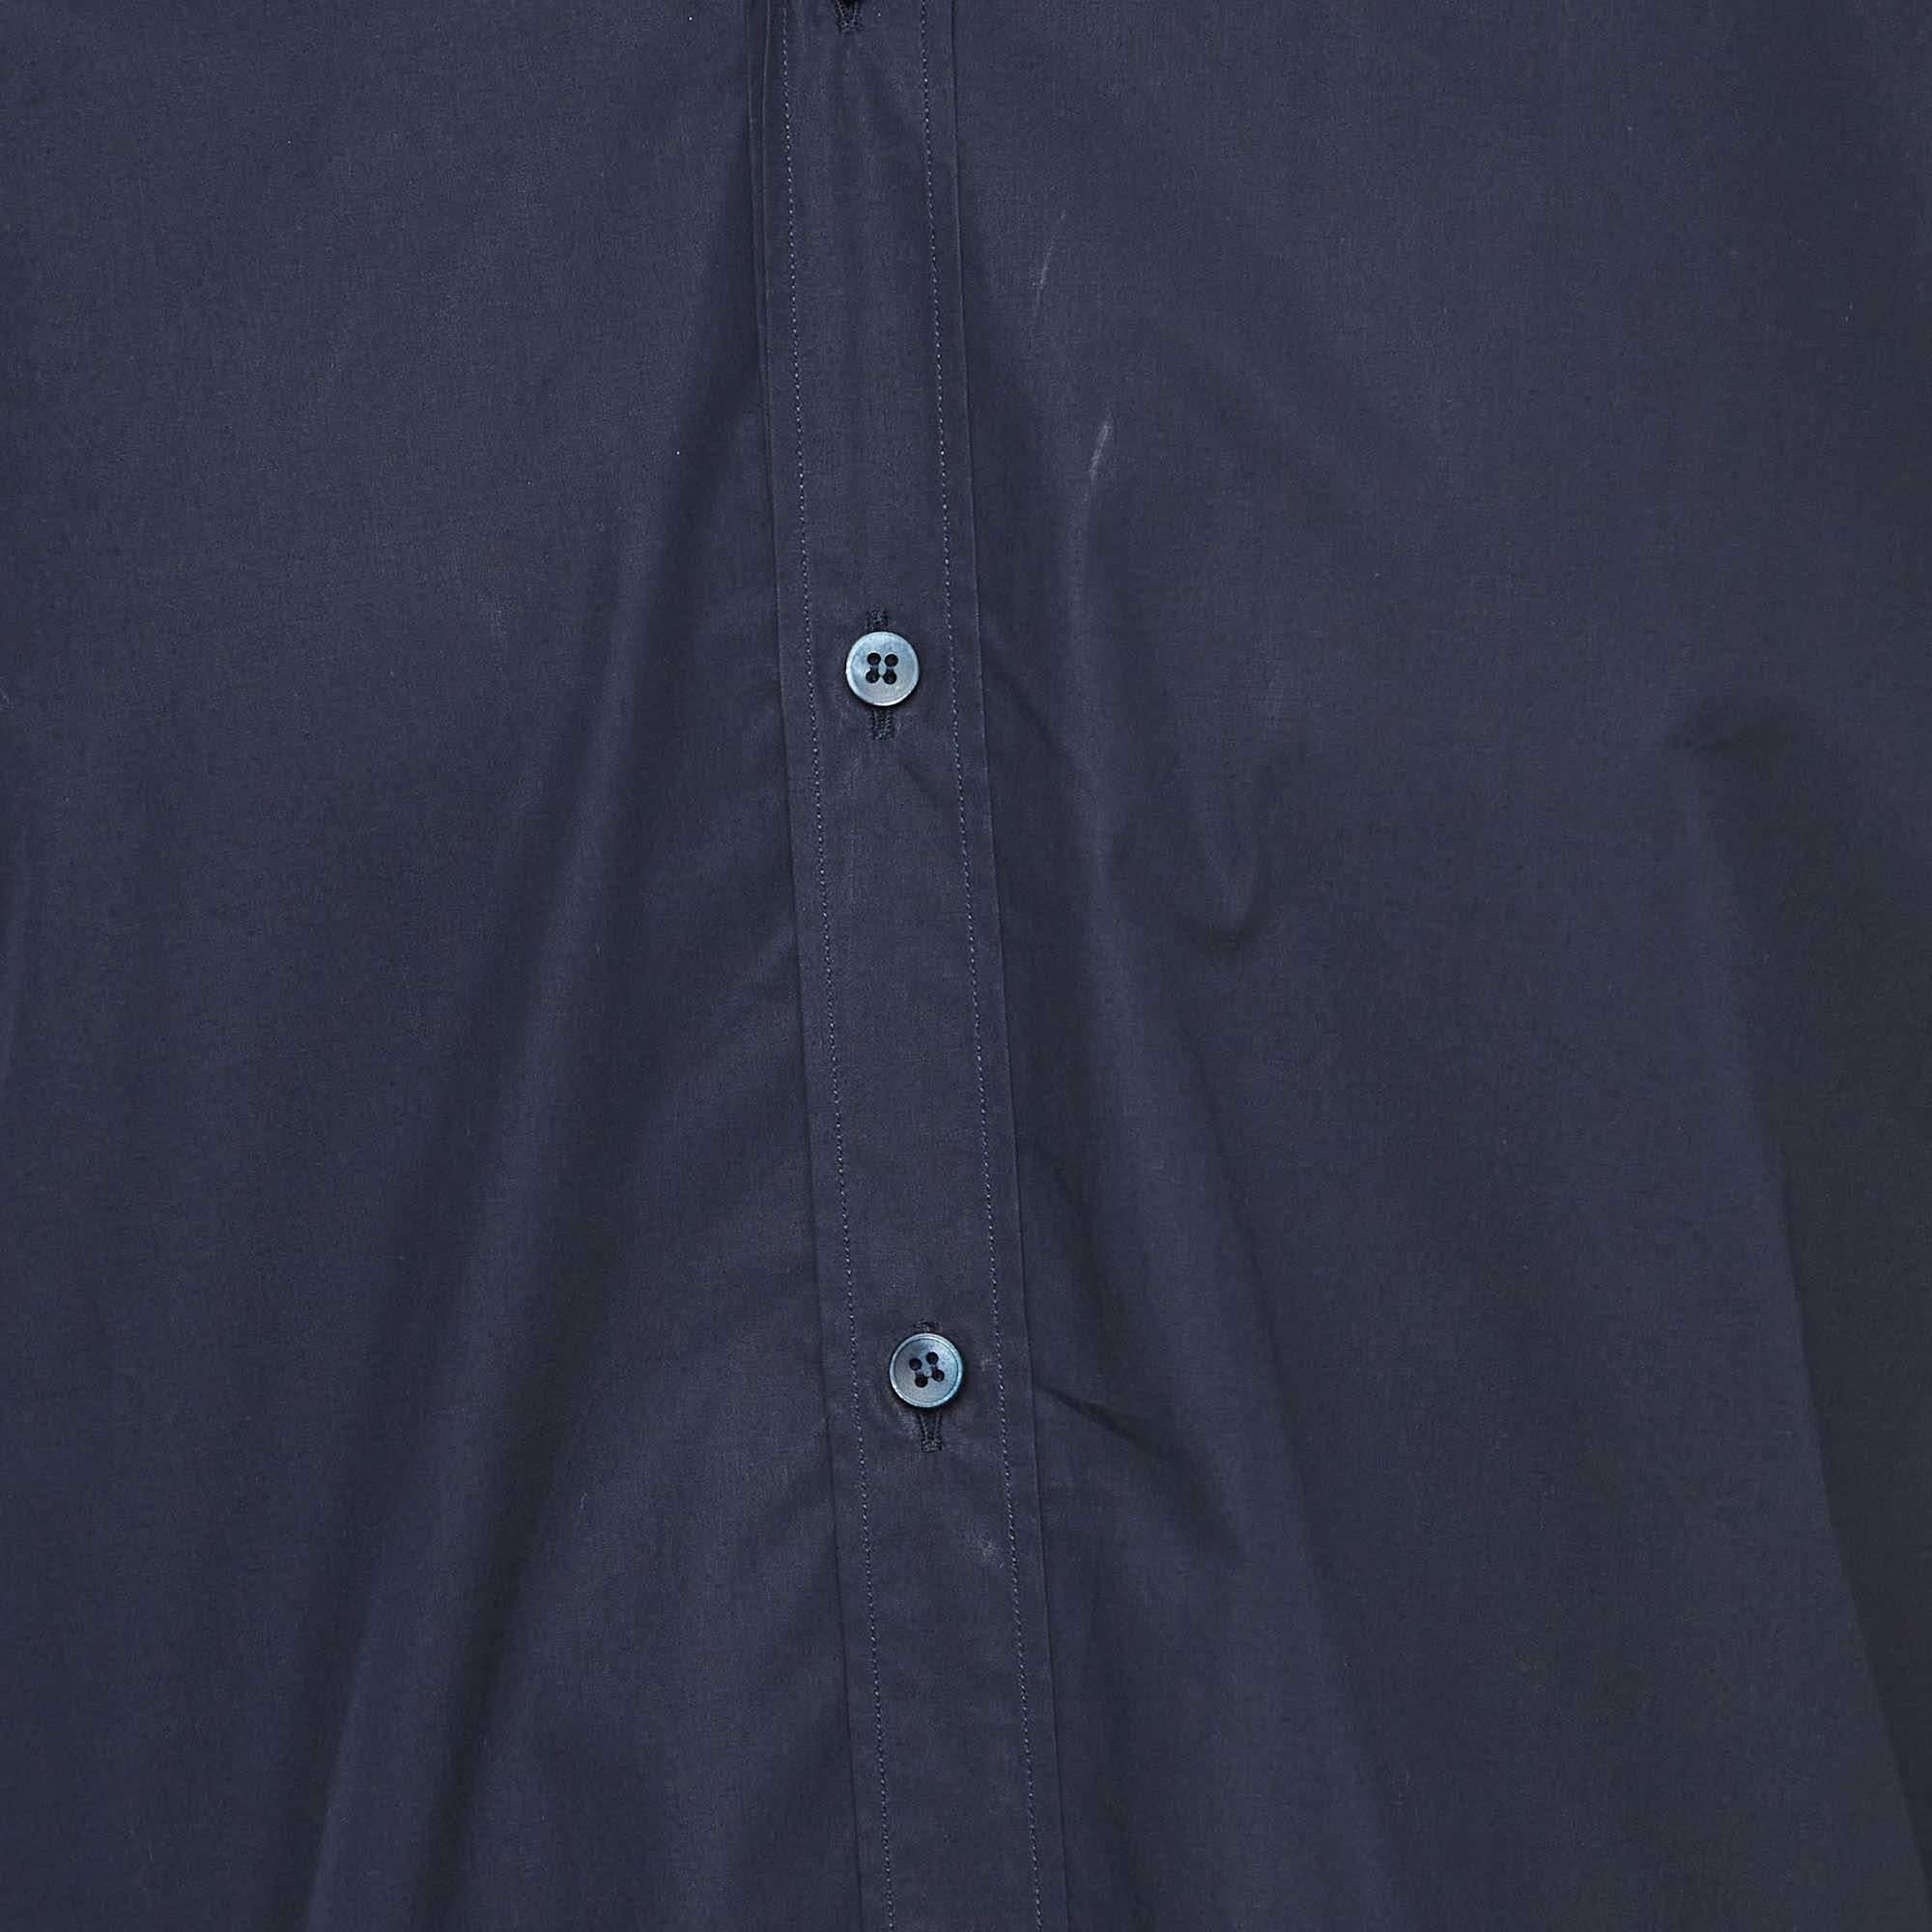 Dolce & Gabbana Dark Blue Cotton Martini Long Sleeve Shirt M In Excellent Condition For Sale In Dubai, Al Qouz 2